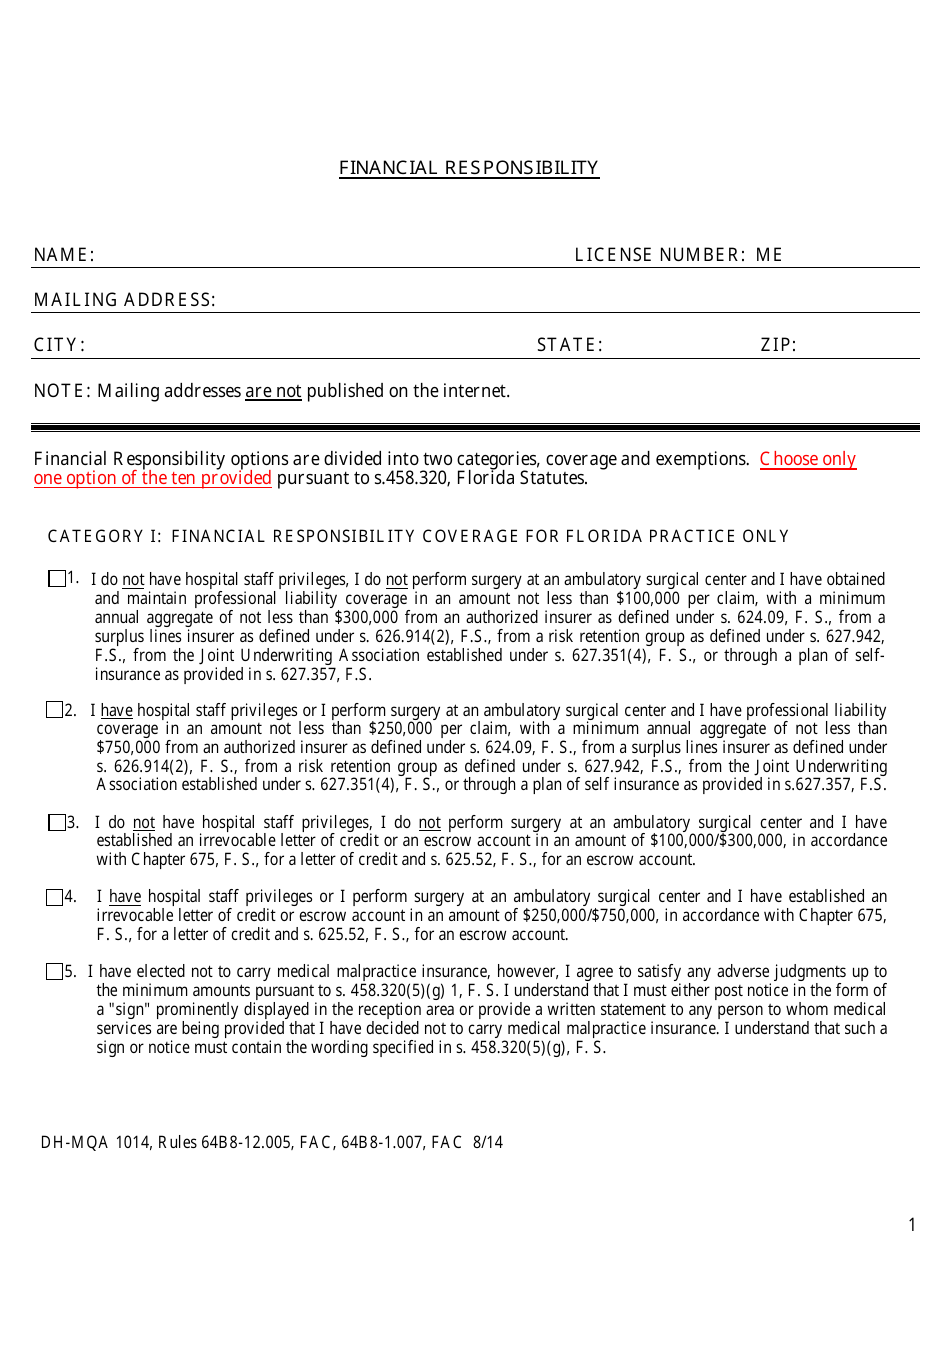 Form DOH-MQA1014 Financial Responsibility - Florida, Page 1